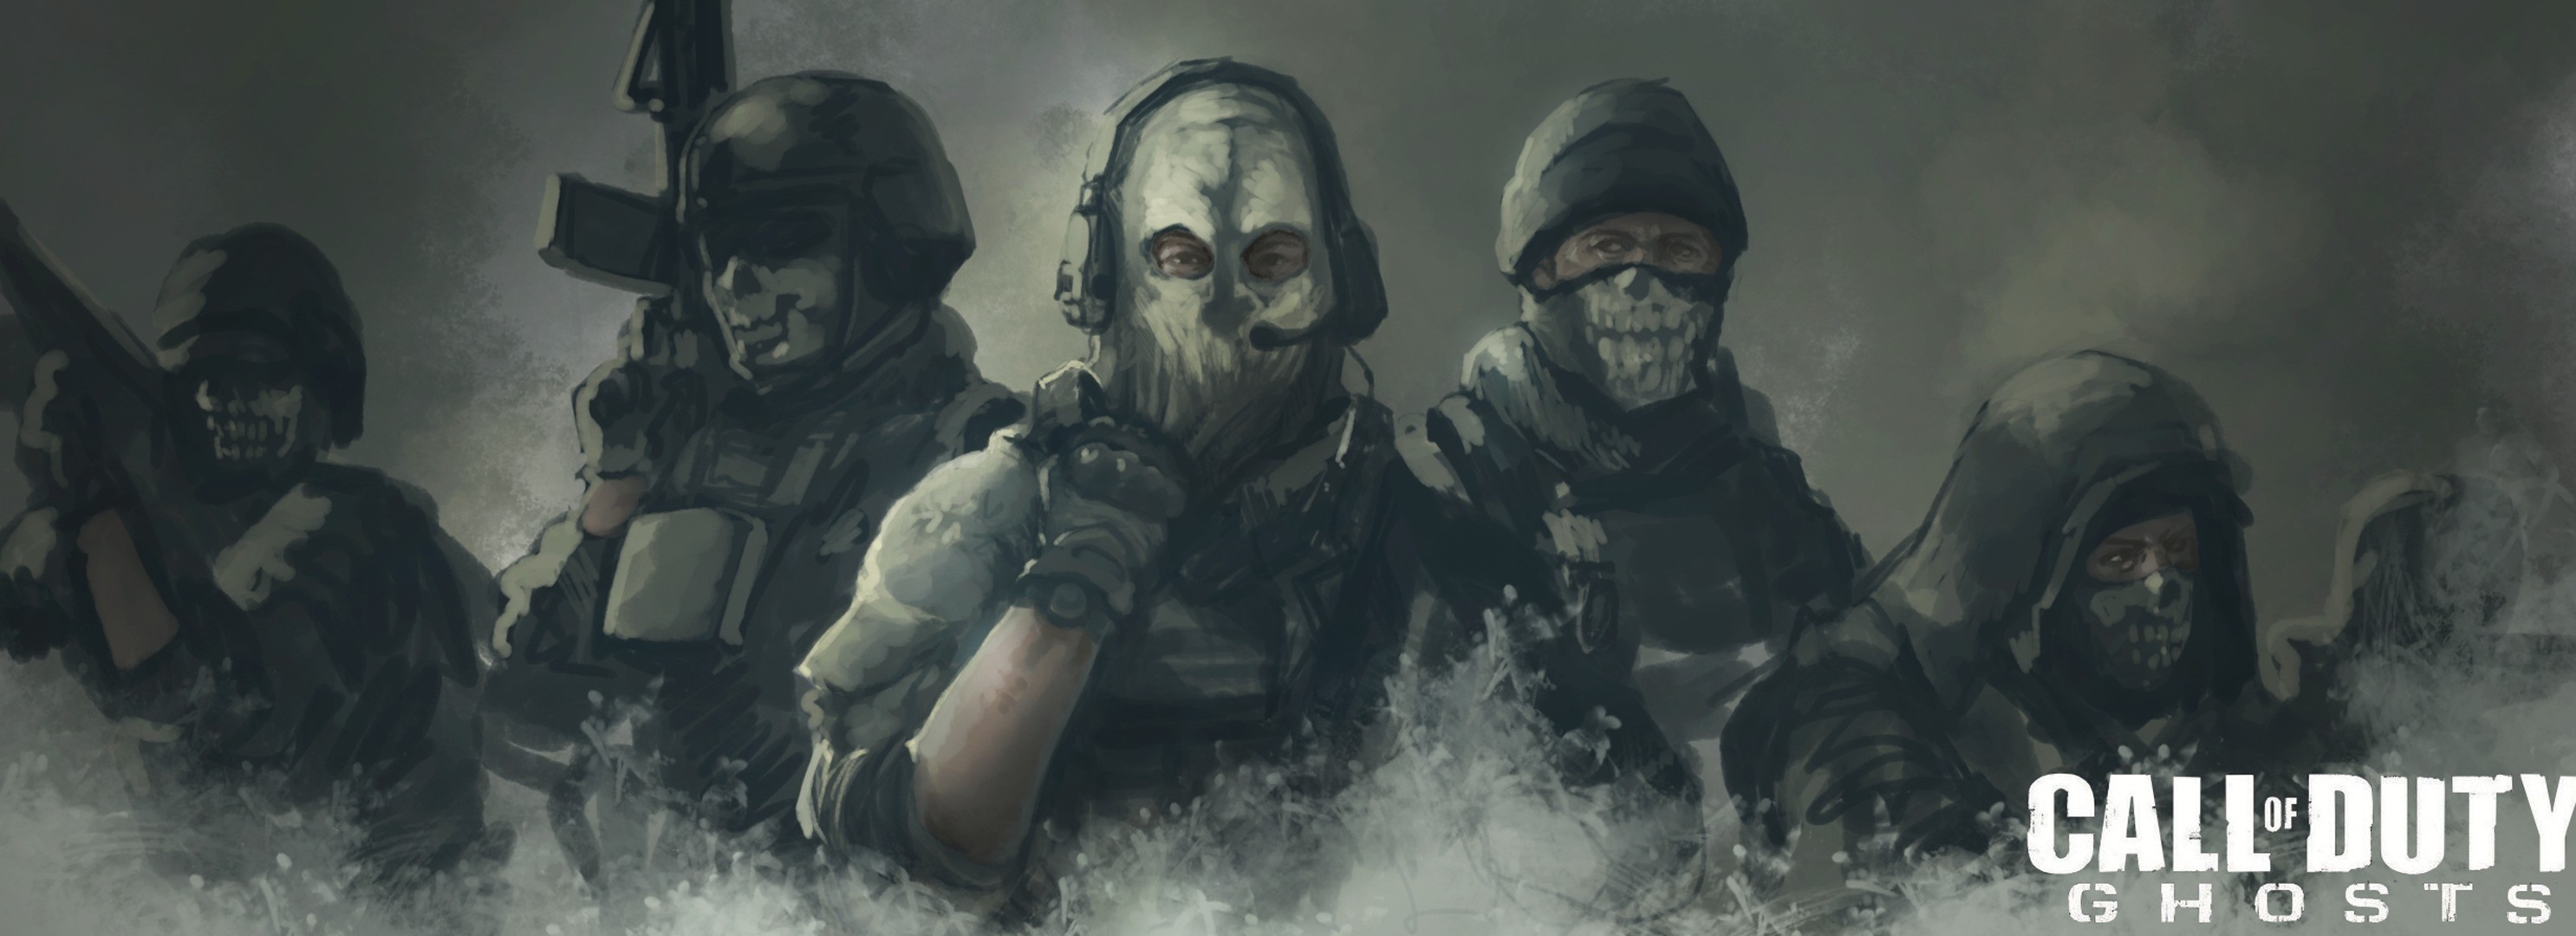 Video games artwork call of duty ghosts screenshot